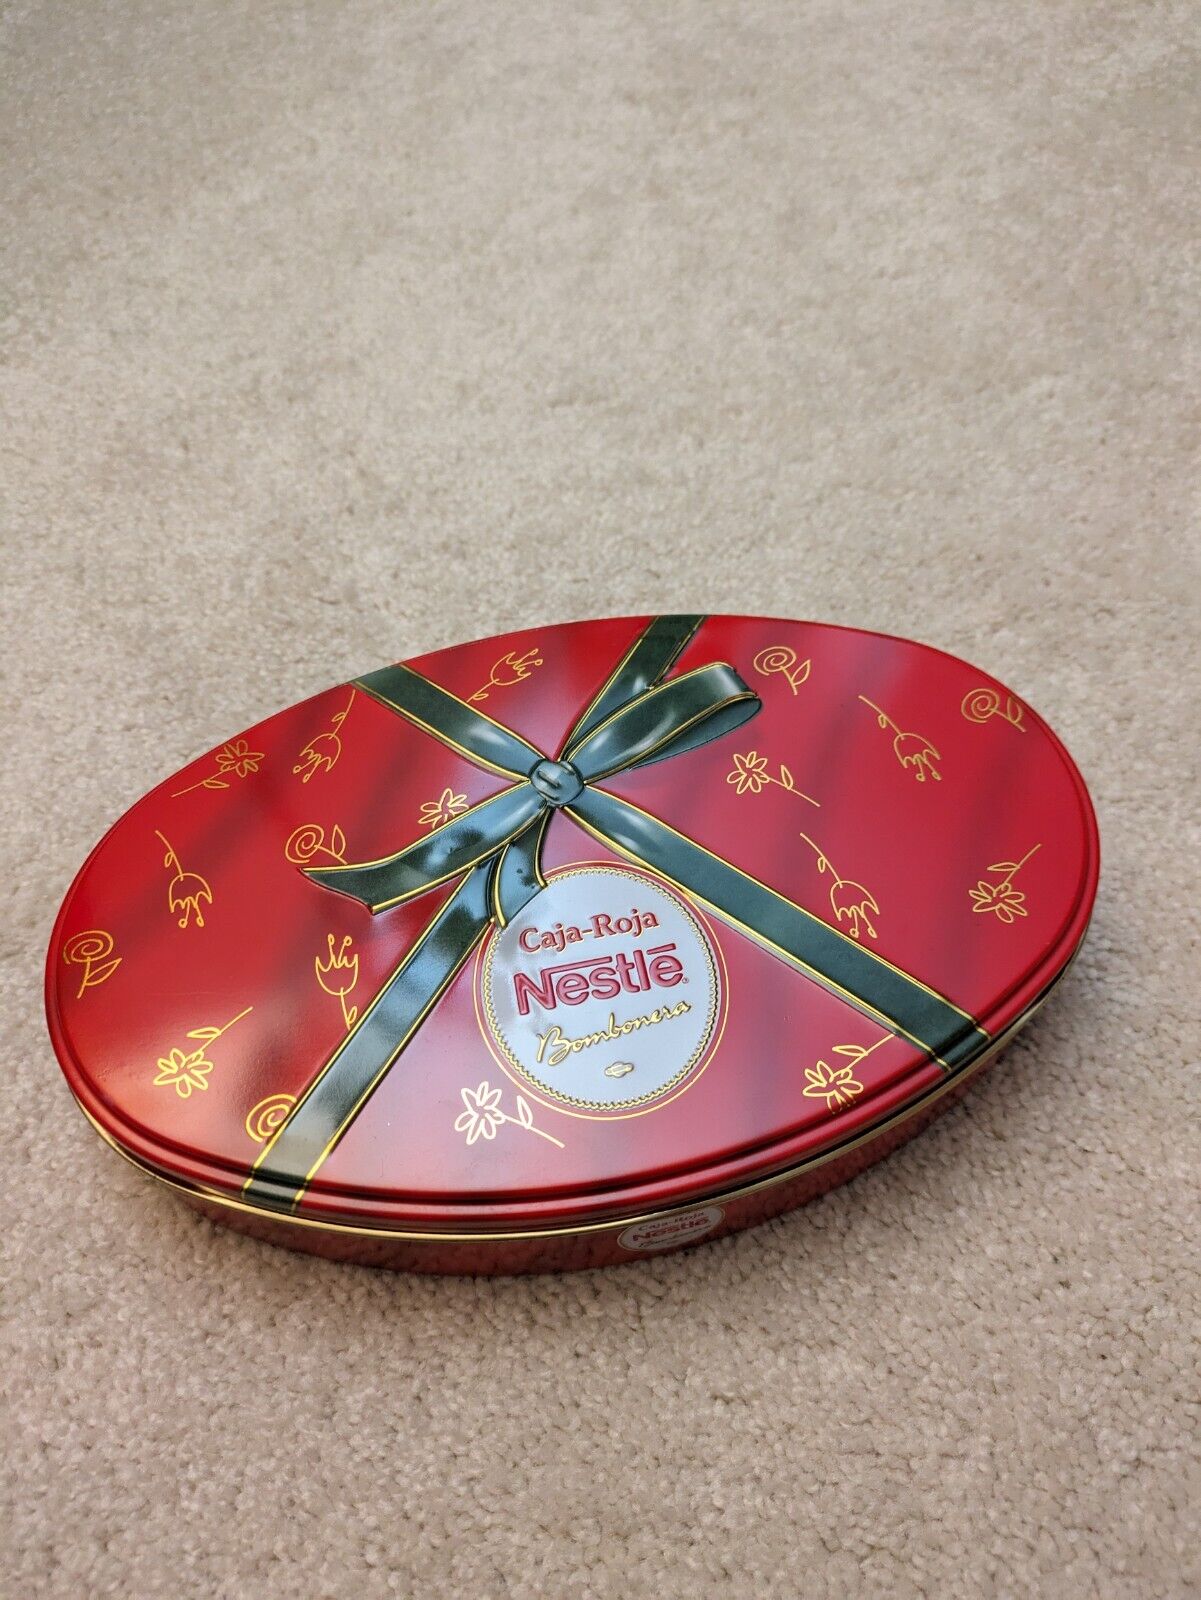 Vintage - 1996 Nestle Chocolate Caja Roja- Bombonera -  Spanish-Oval Biscuit Tin